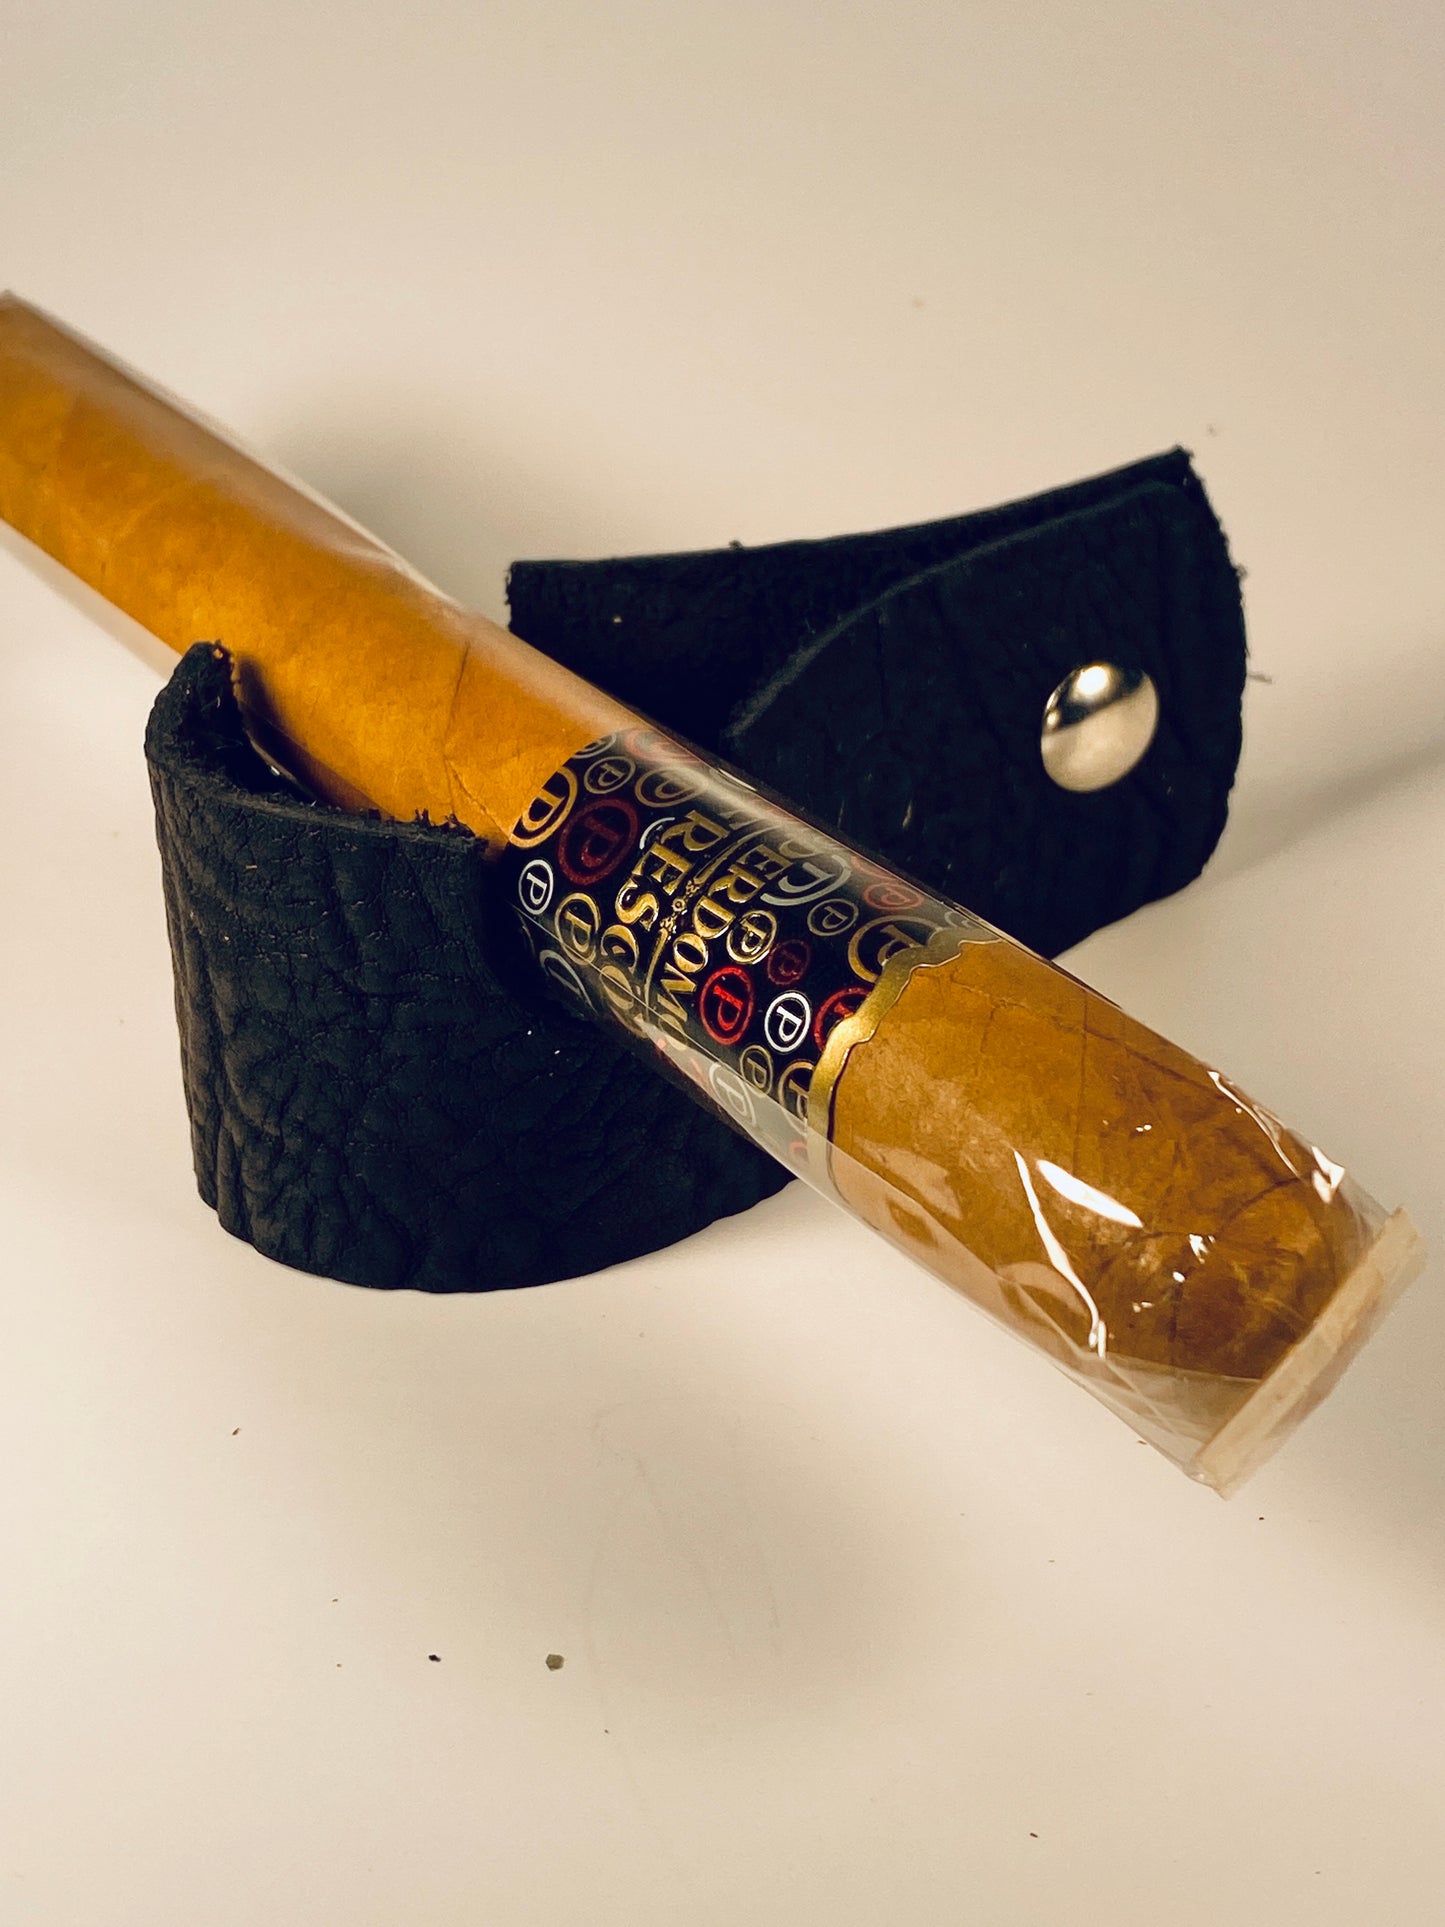 Cigar Rest